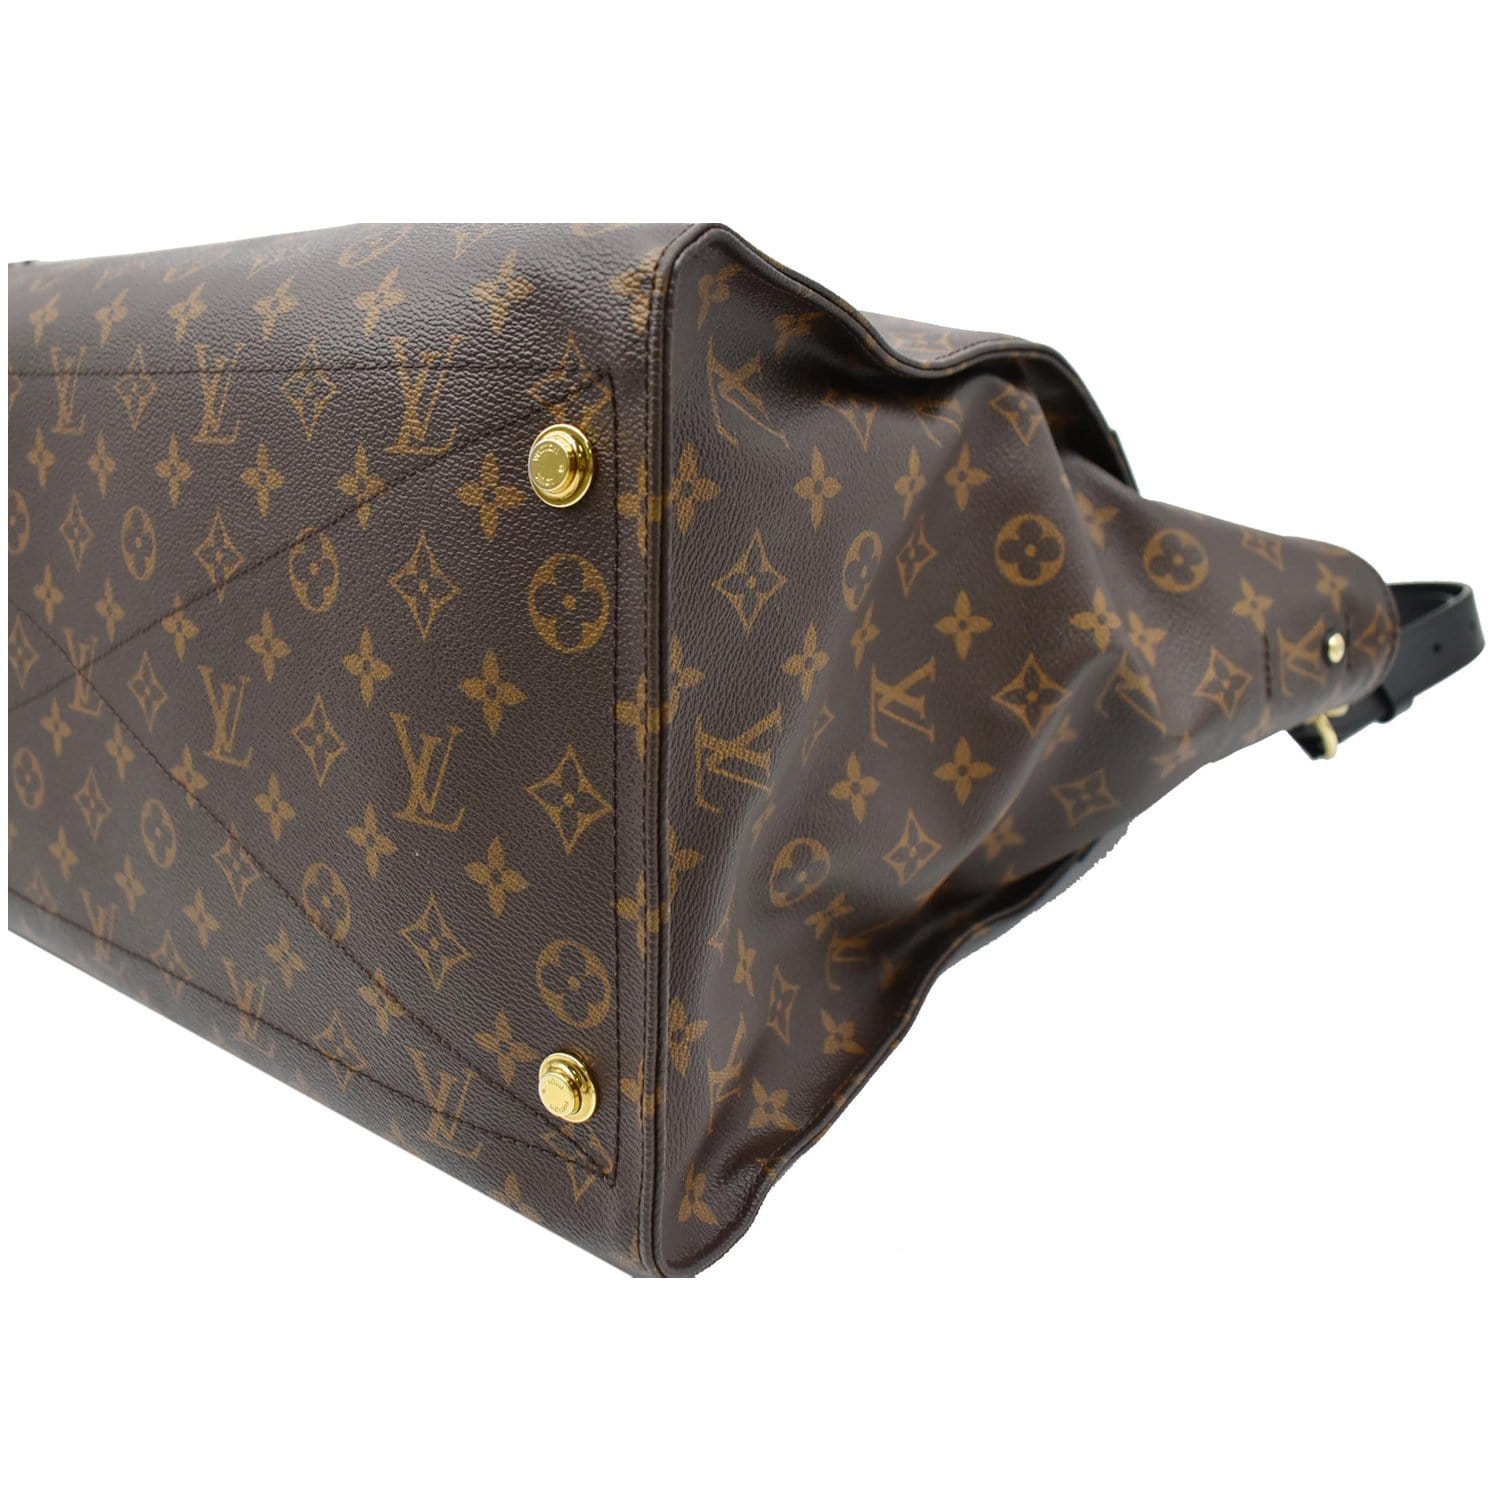 Louis Vuitton City Steamer Cabas XXL Bag